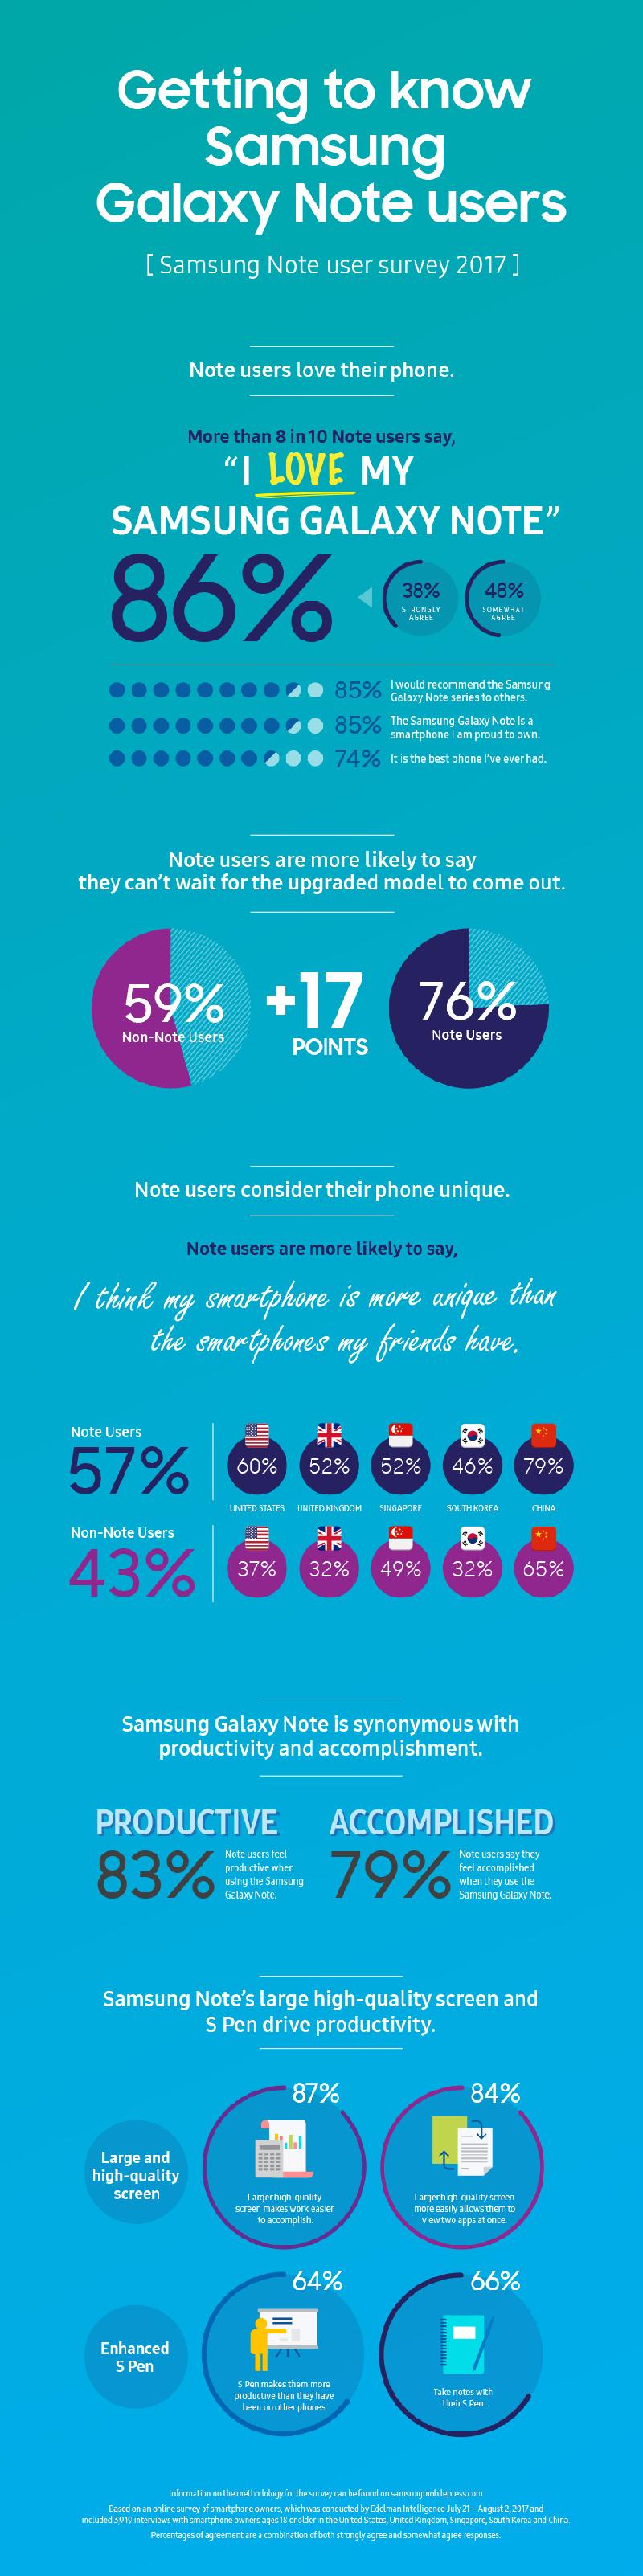 Note-user-survey_2017_infographic-5.jpg